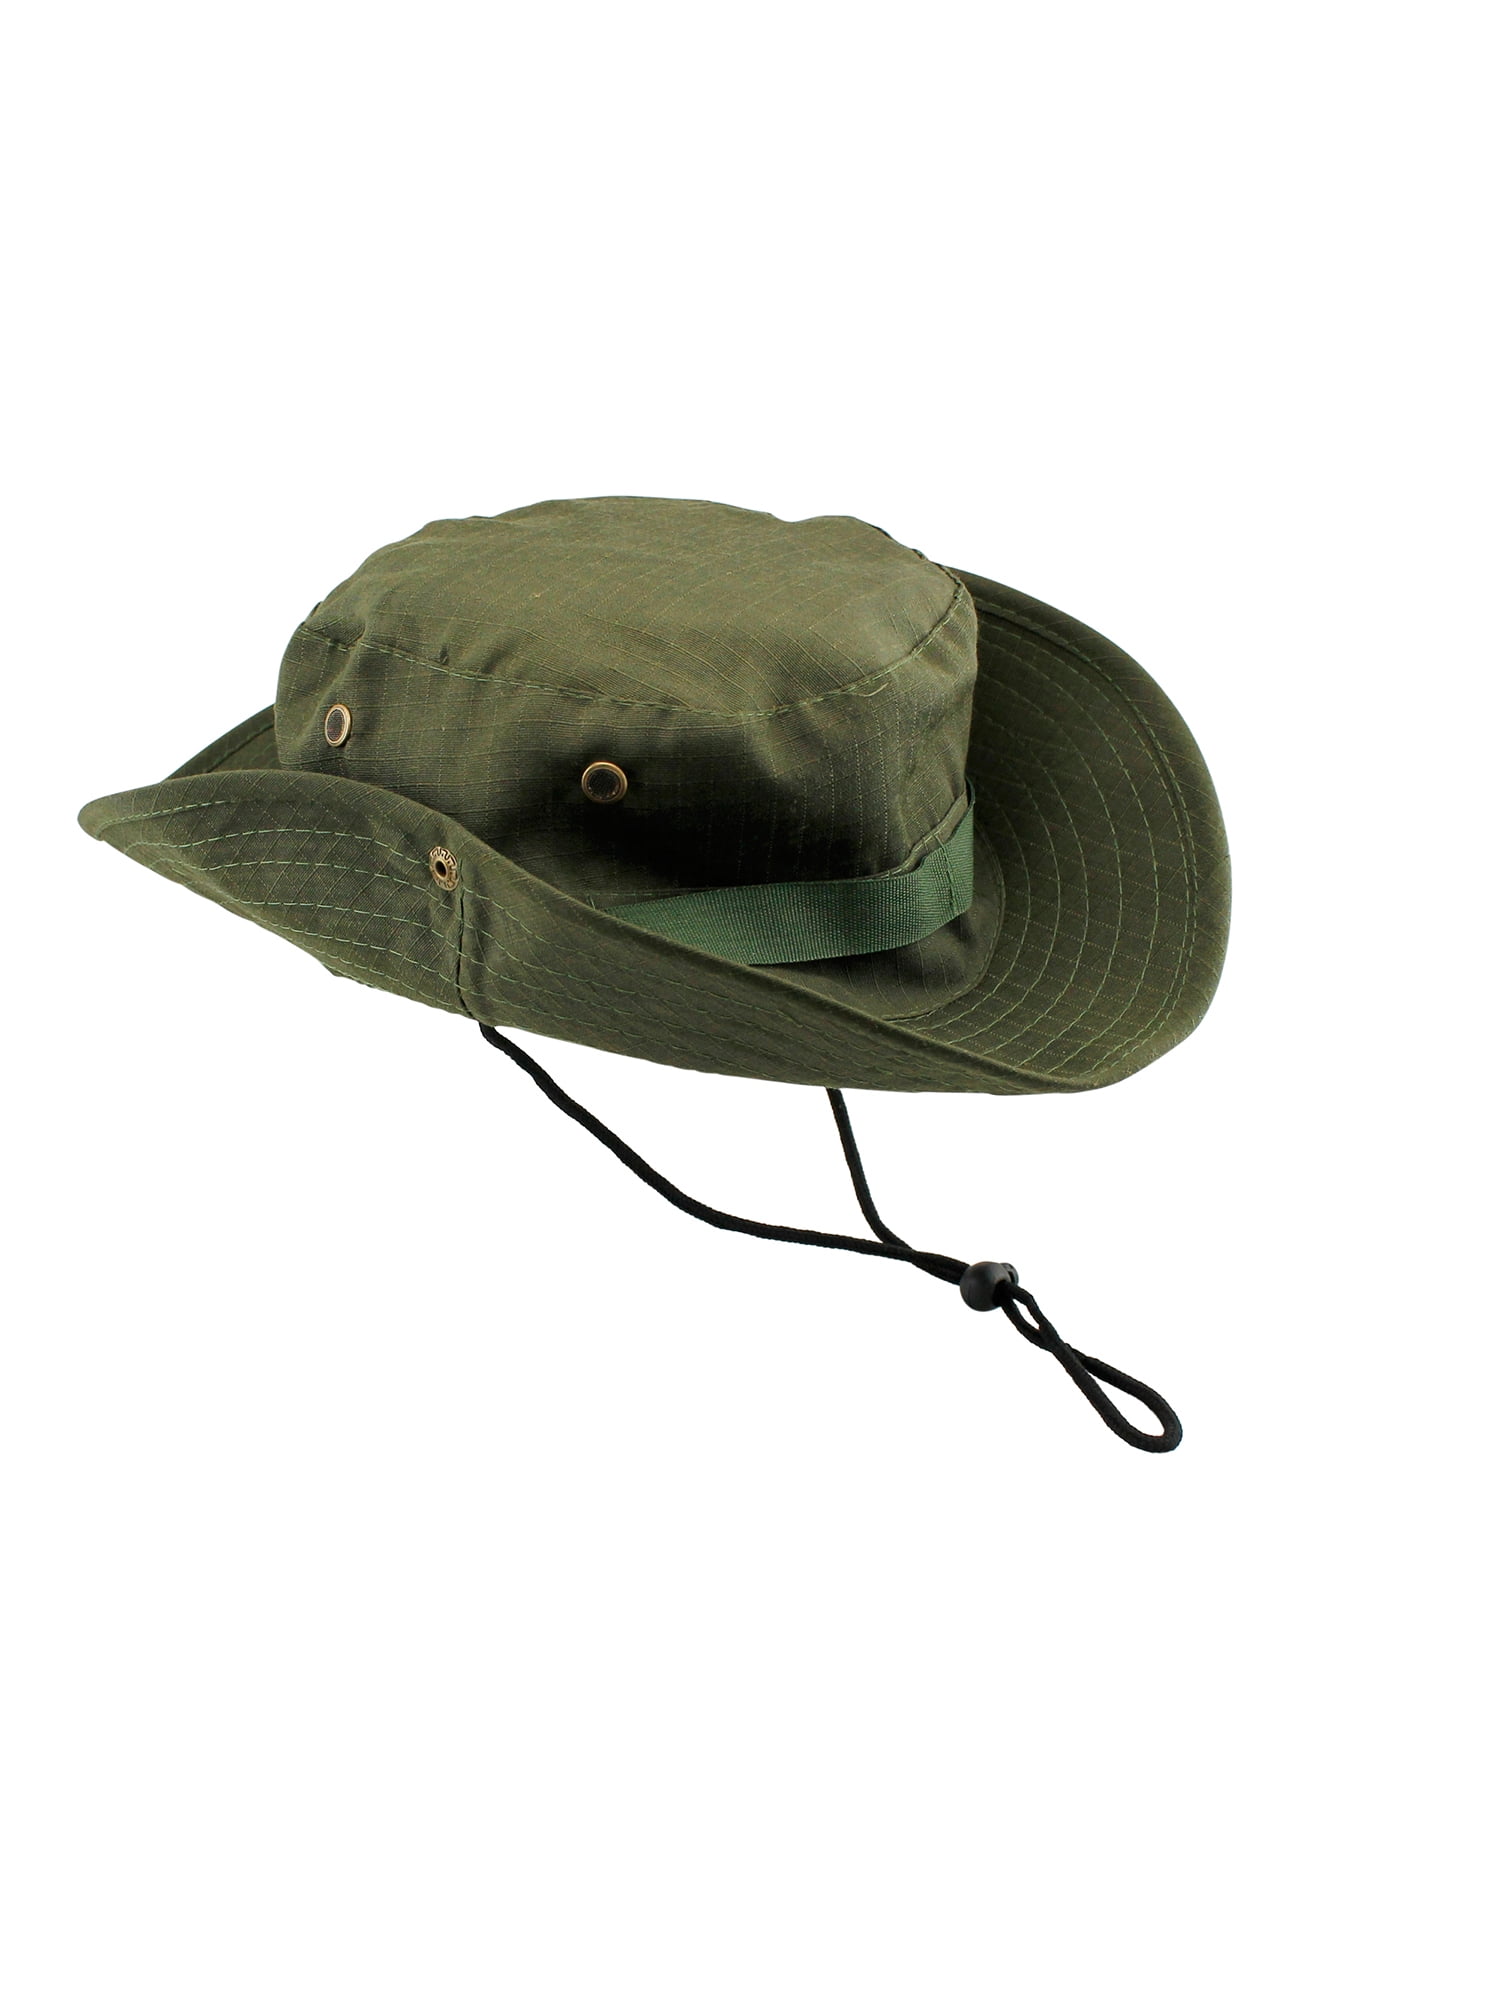 Boonie Bucket Hat Cap Cotton Fishing Military Hunting Safari Summer Men 1510 